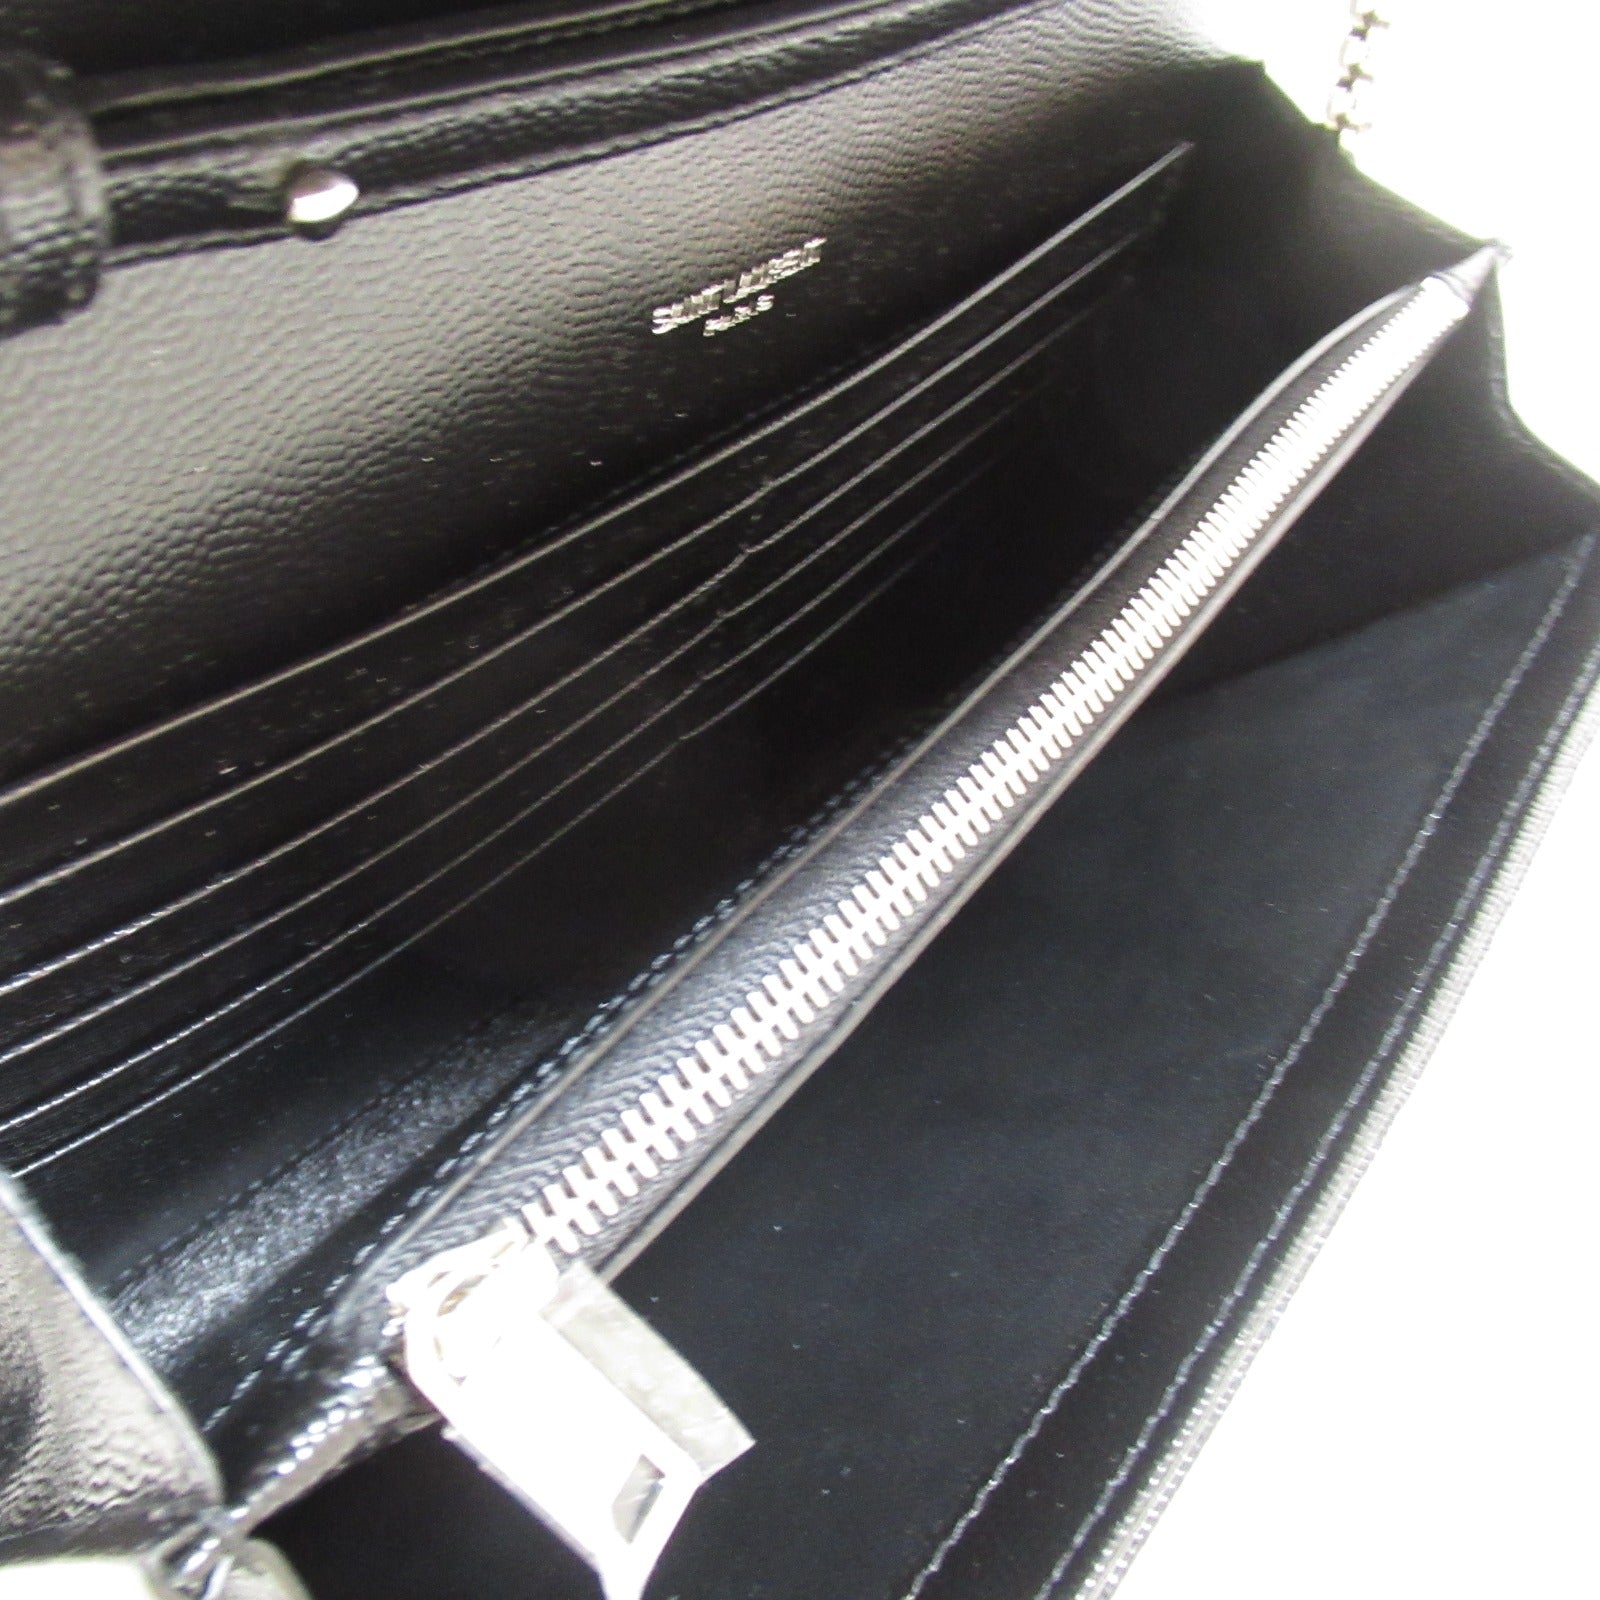 Saint Laurent Chain Shoulder Bag Leather Bag  Black 620280BOW921000